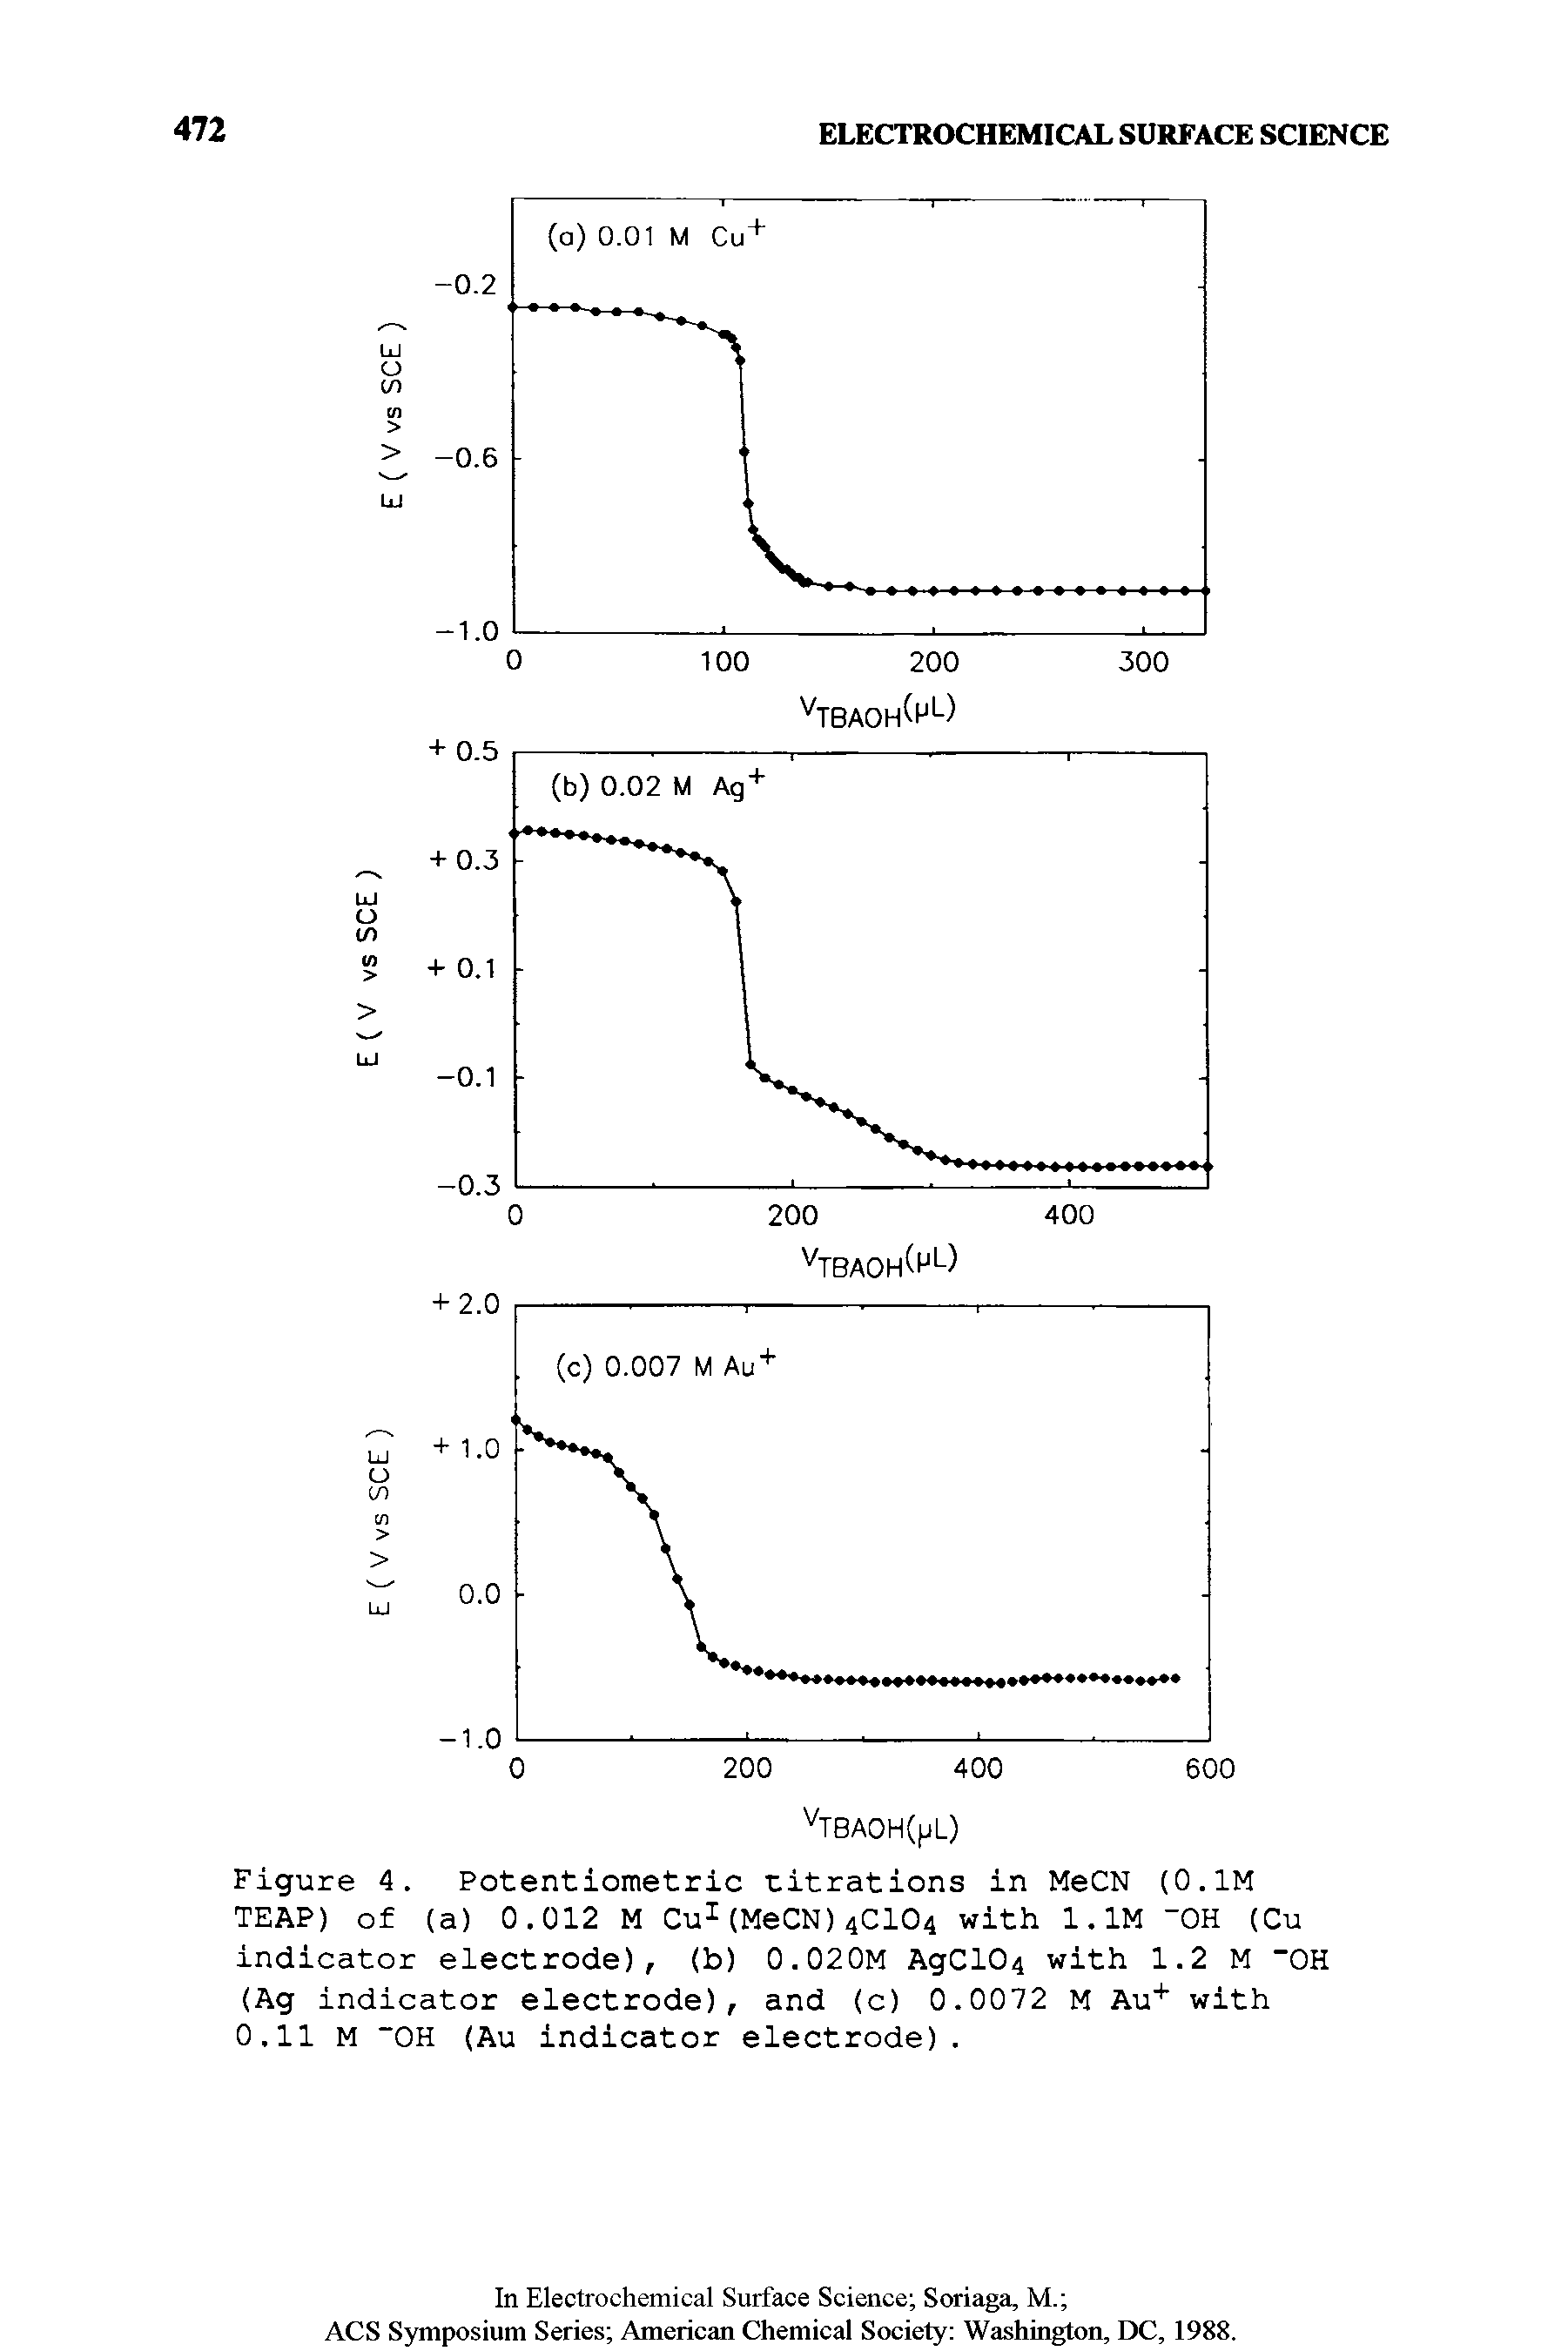 Figure 4. Potentiometric titrations in MeCN (0.1M TEAP) of (a) 0.012 M Cu1(MeCN)4CIO4 with 1.1M "OH (Cu indicator electrode), (b) 0.020M AgC104 with 1.2 M "OH (Ag indicator electrode), and (c) 0.0072 M Au+ with 0,11 M "OH (Au indicator electrode).